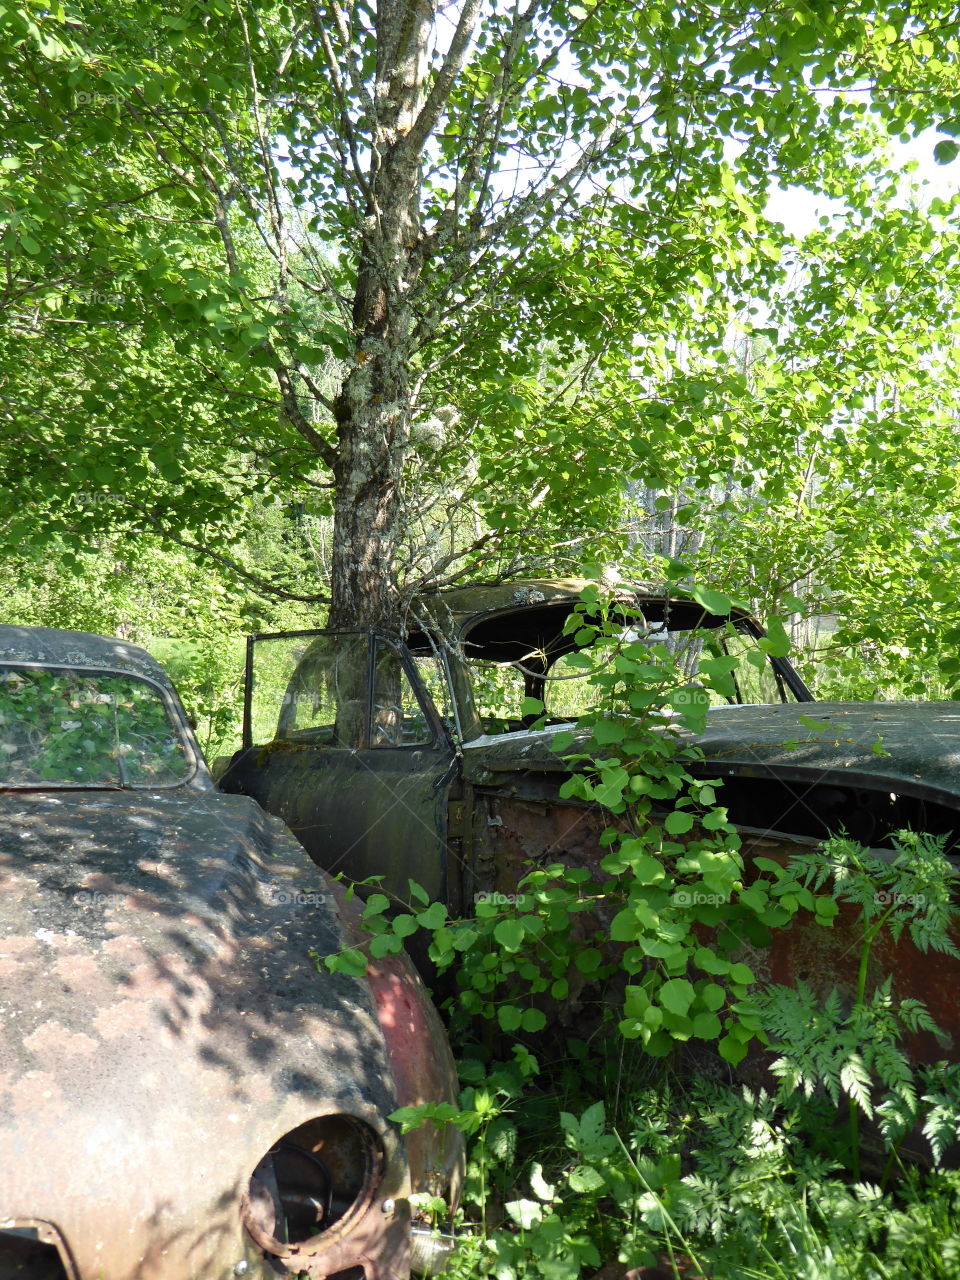 Car and tree